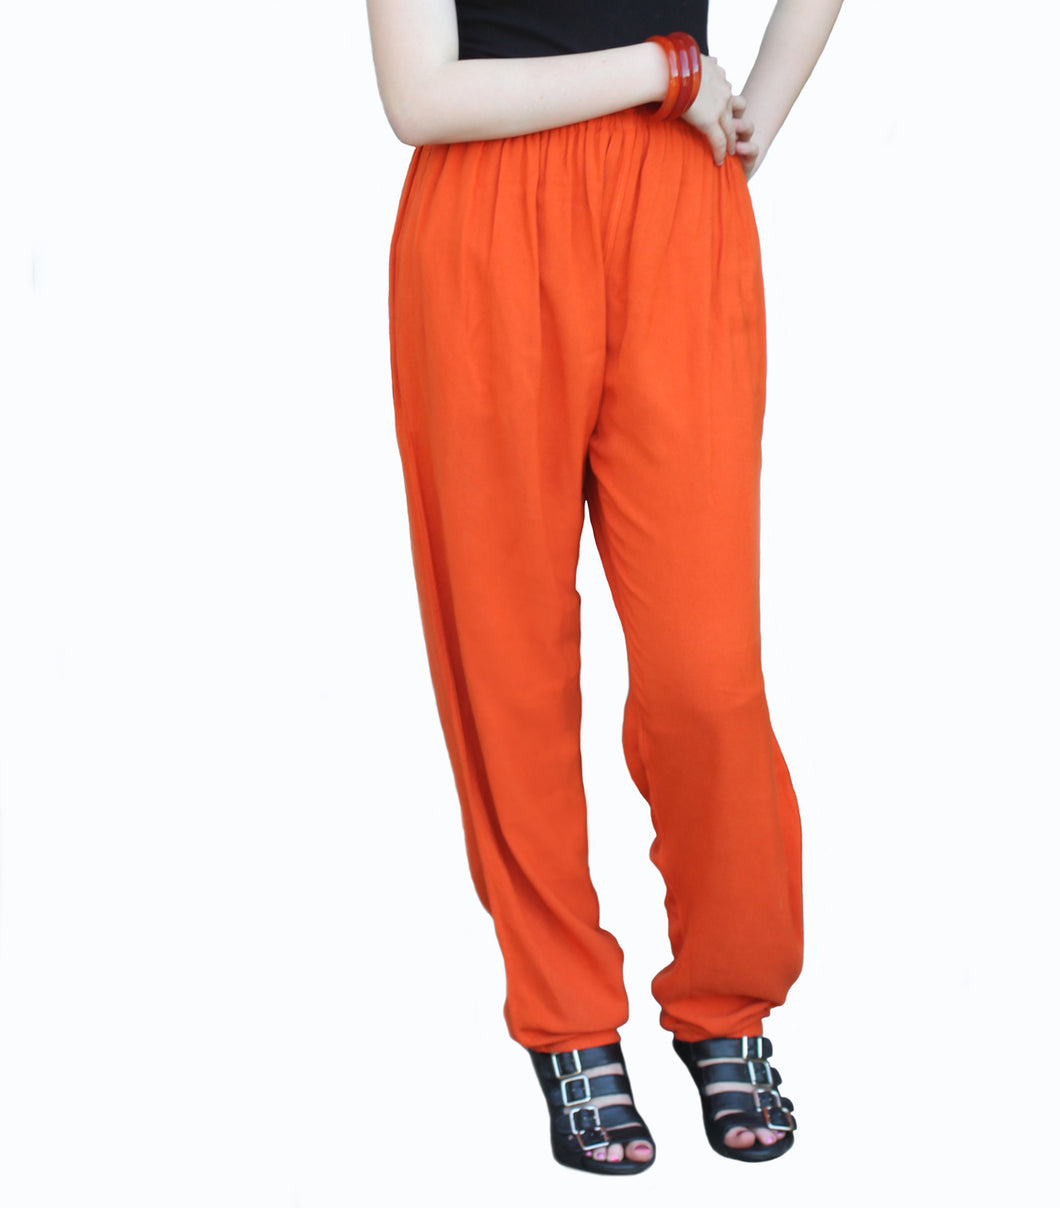 Tienda Ho Pumpkin Orange Cotton Rayon Moroccan Casual Pants in Sonya Design - One Size OS